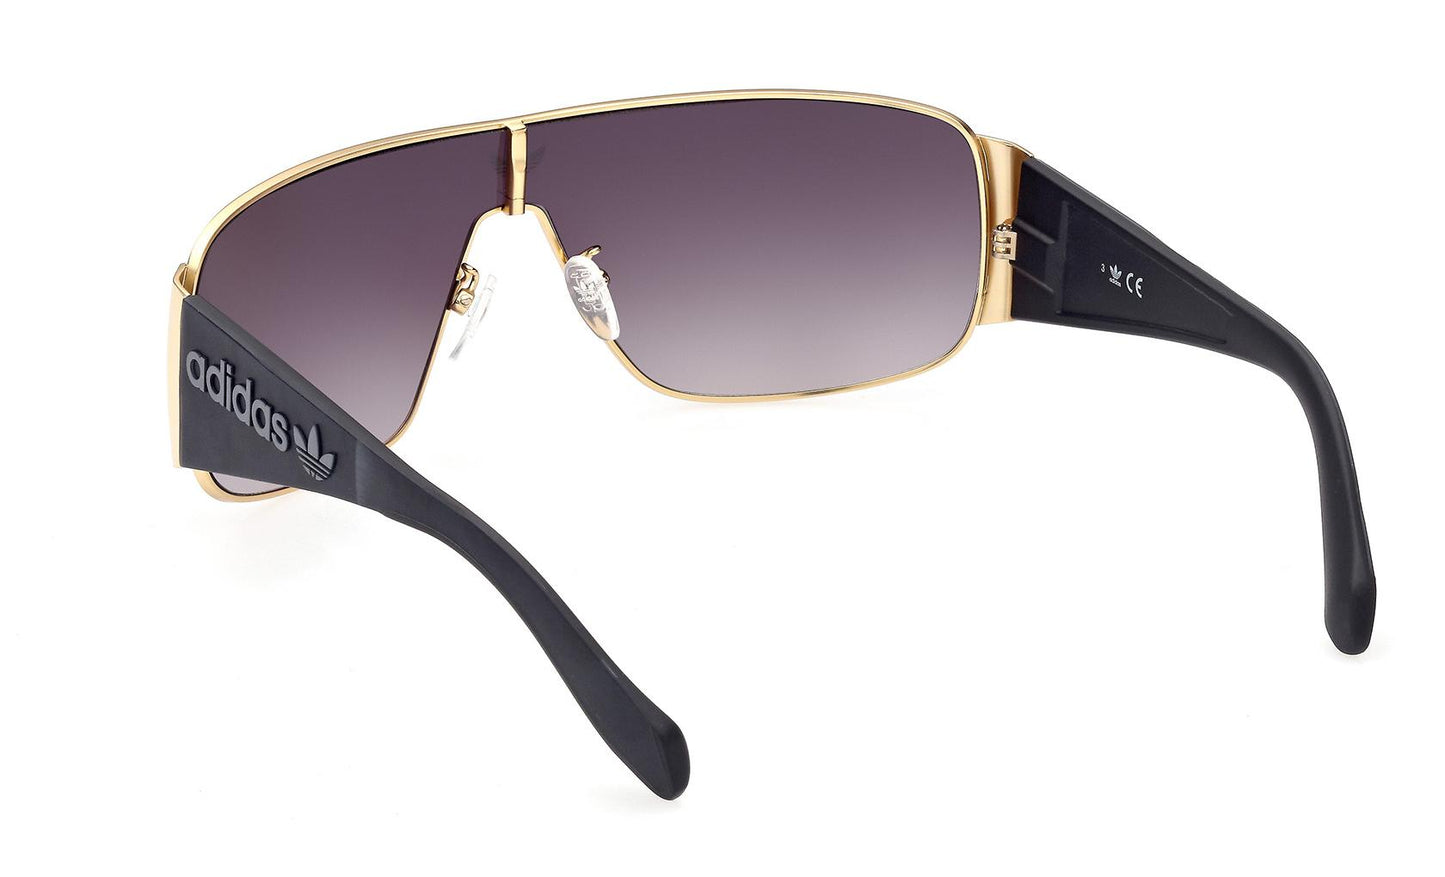 Adidas Originals Sunglasses OR0058 30B